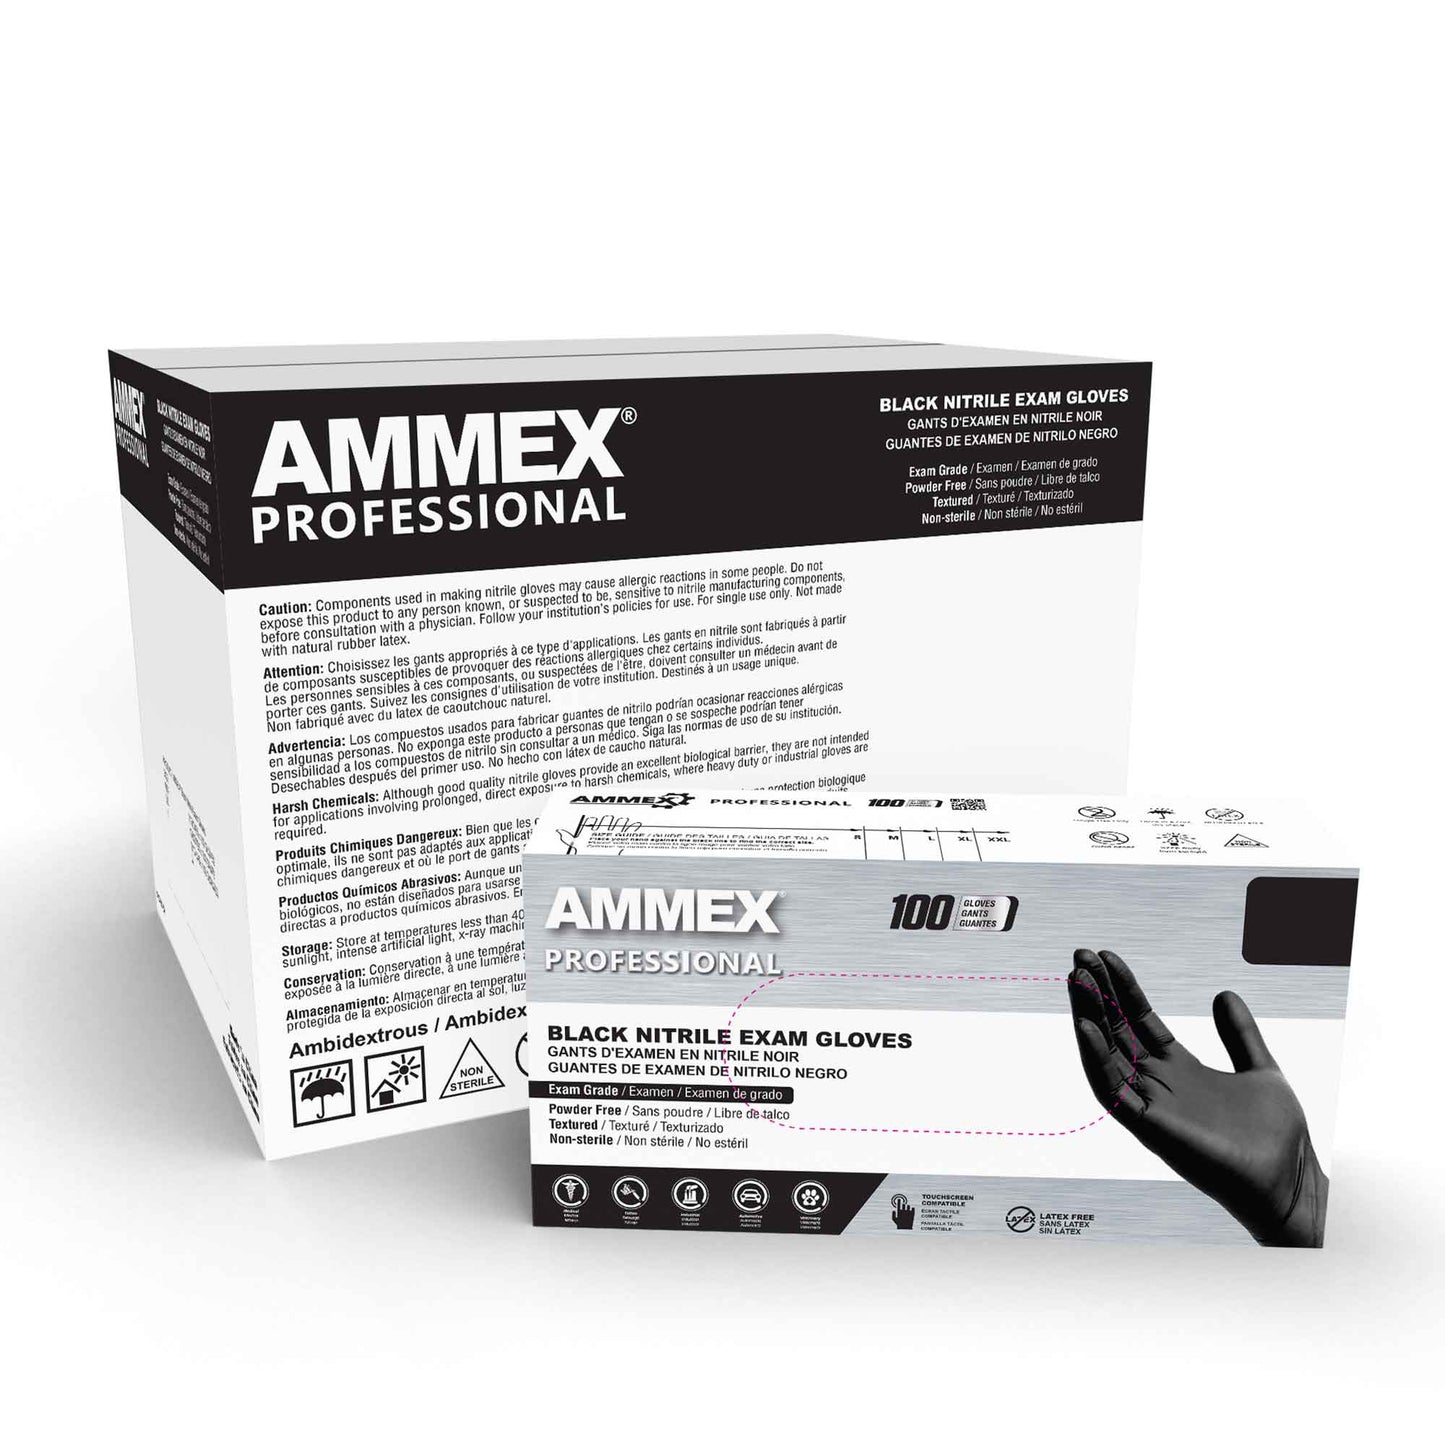 AMMEX Professional Black Nitrile, Medium, Box of 100